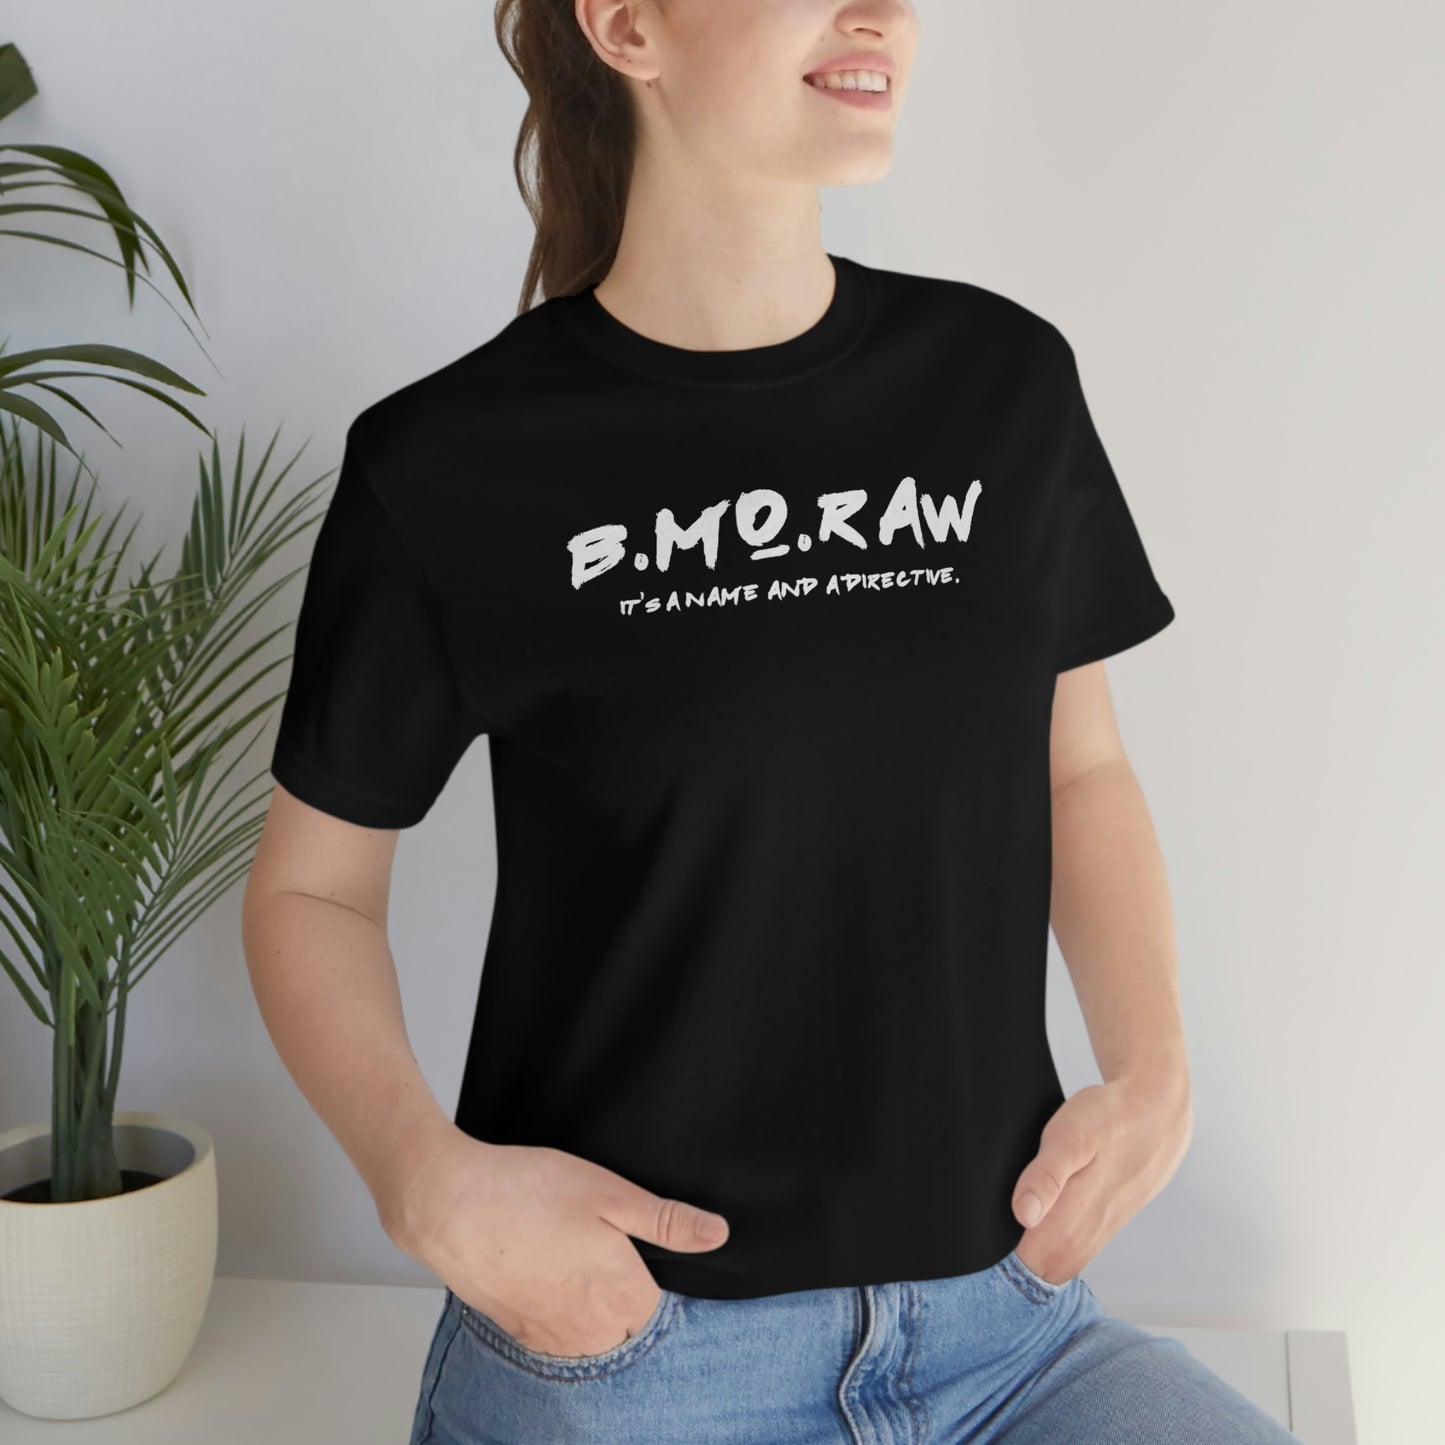 BMoRaw, A Raw-ism - Tee